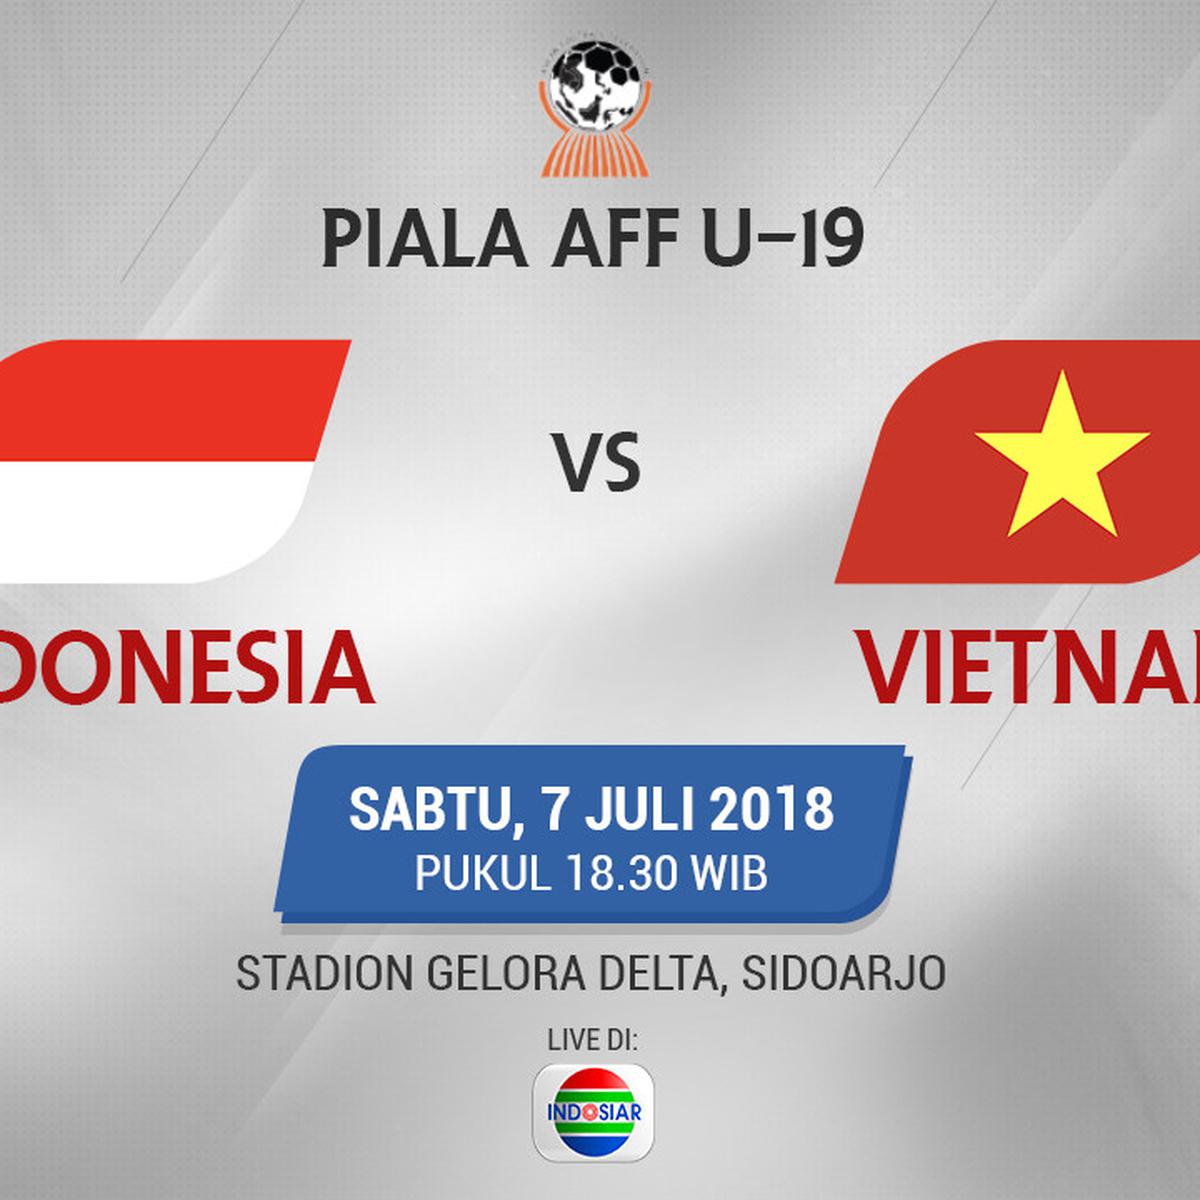 Indonesia vs vietnam livestream. Vietnam vs Indonesia. Live streaming Indonesia vs Vietnam. Вьетнам Индонезия. Live Bola Indonesia.